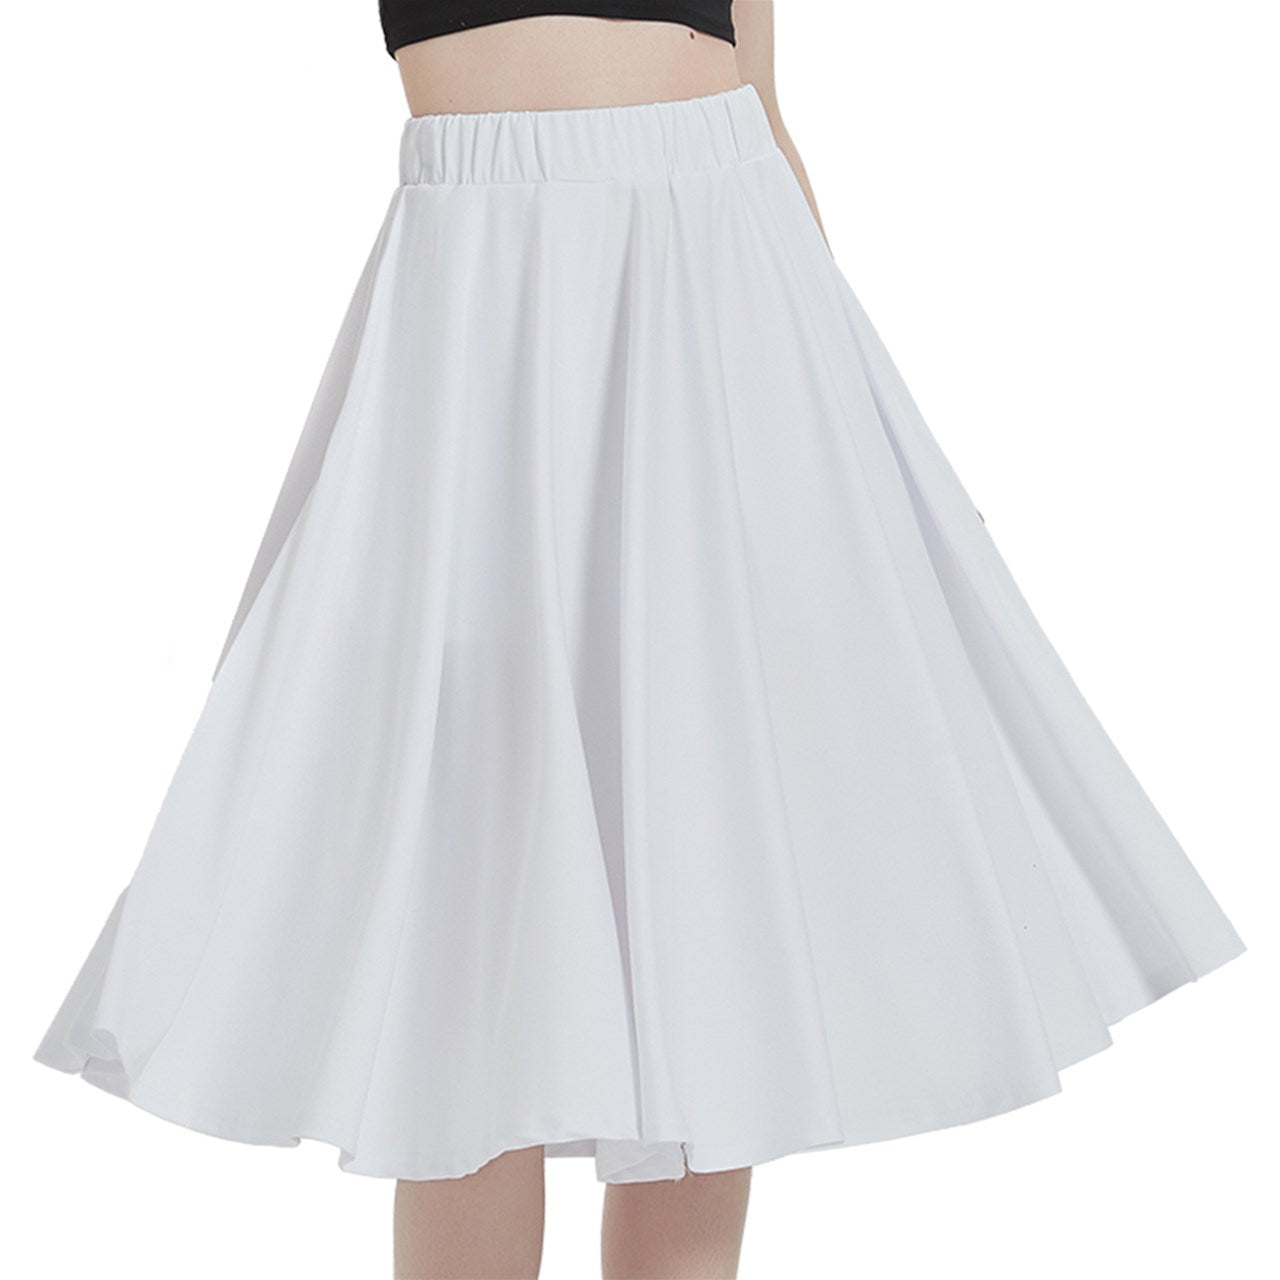 White A-Line Midi Skirt With Pocket